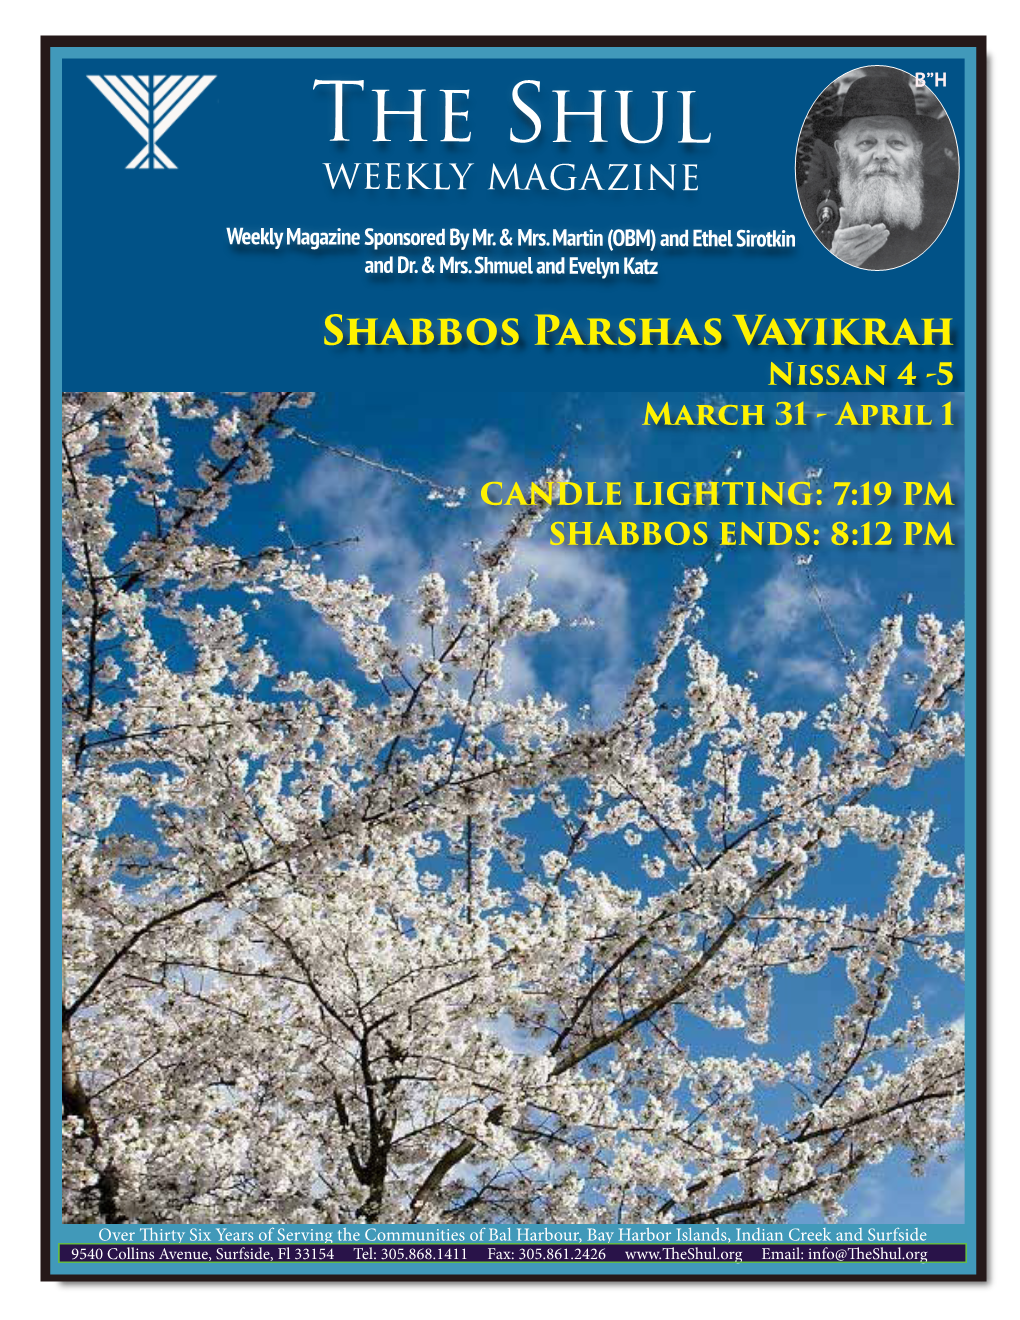 The Shul Weekly Magazine Weekly Magazine Sponsored by Mr